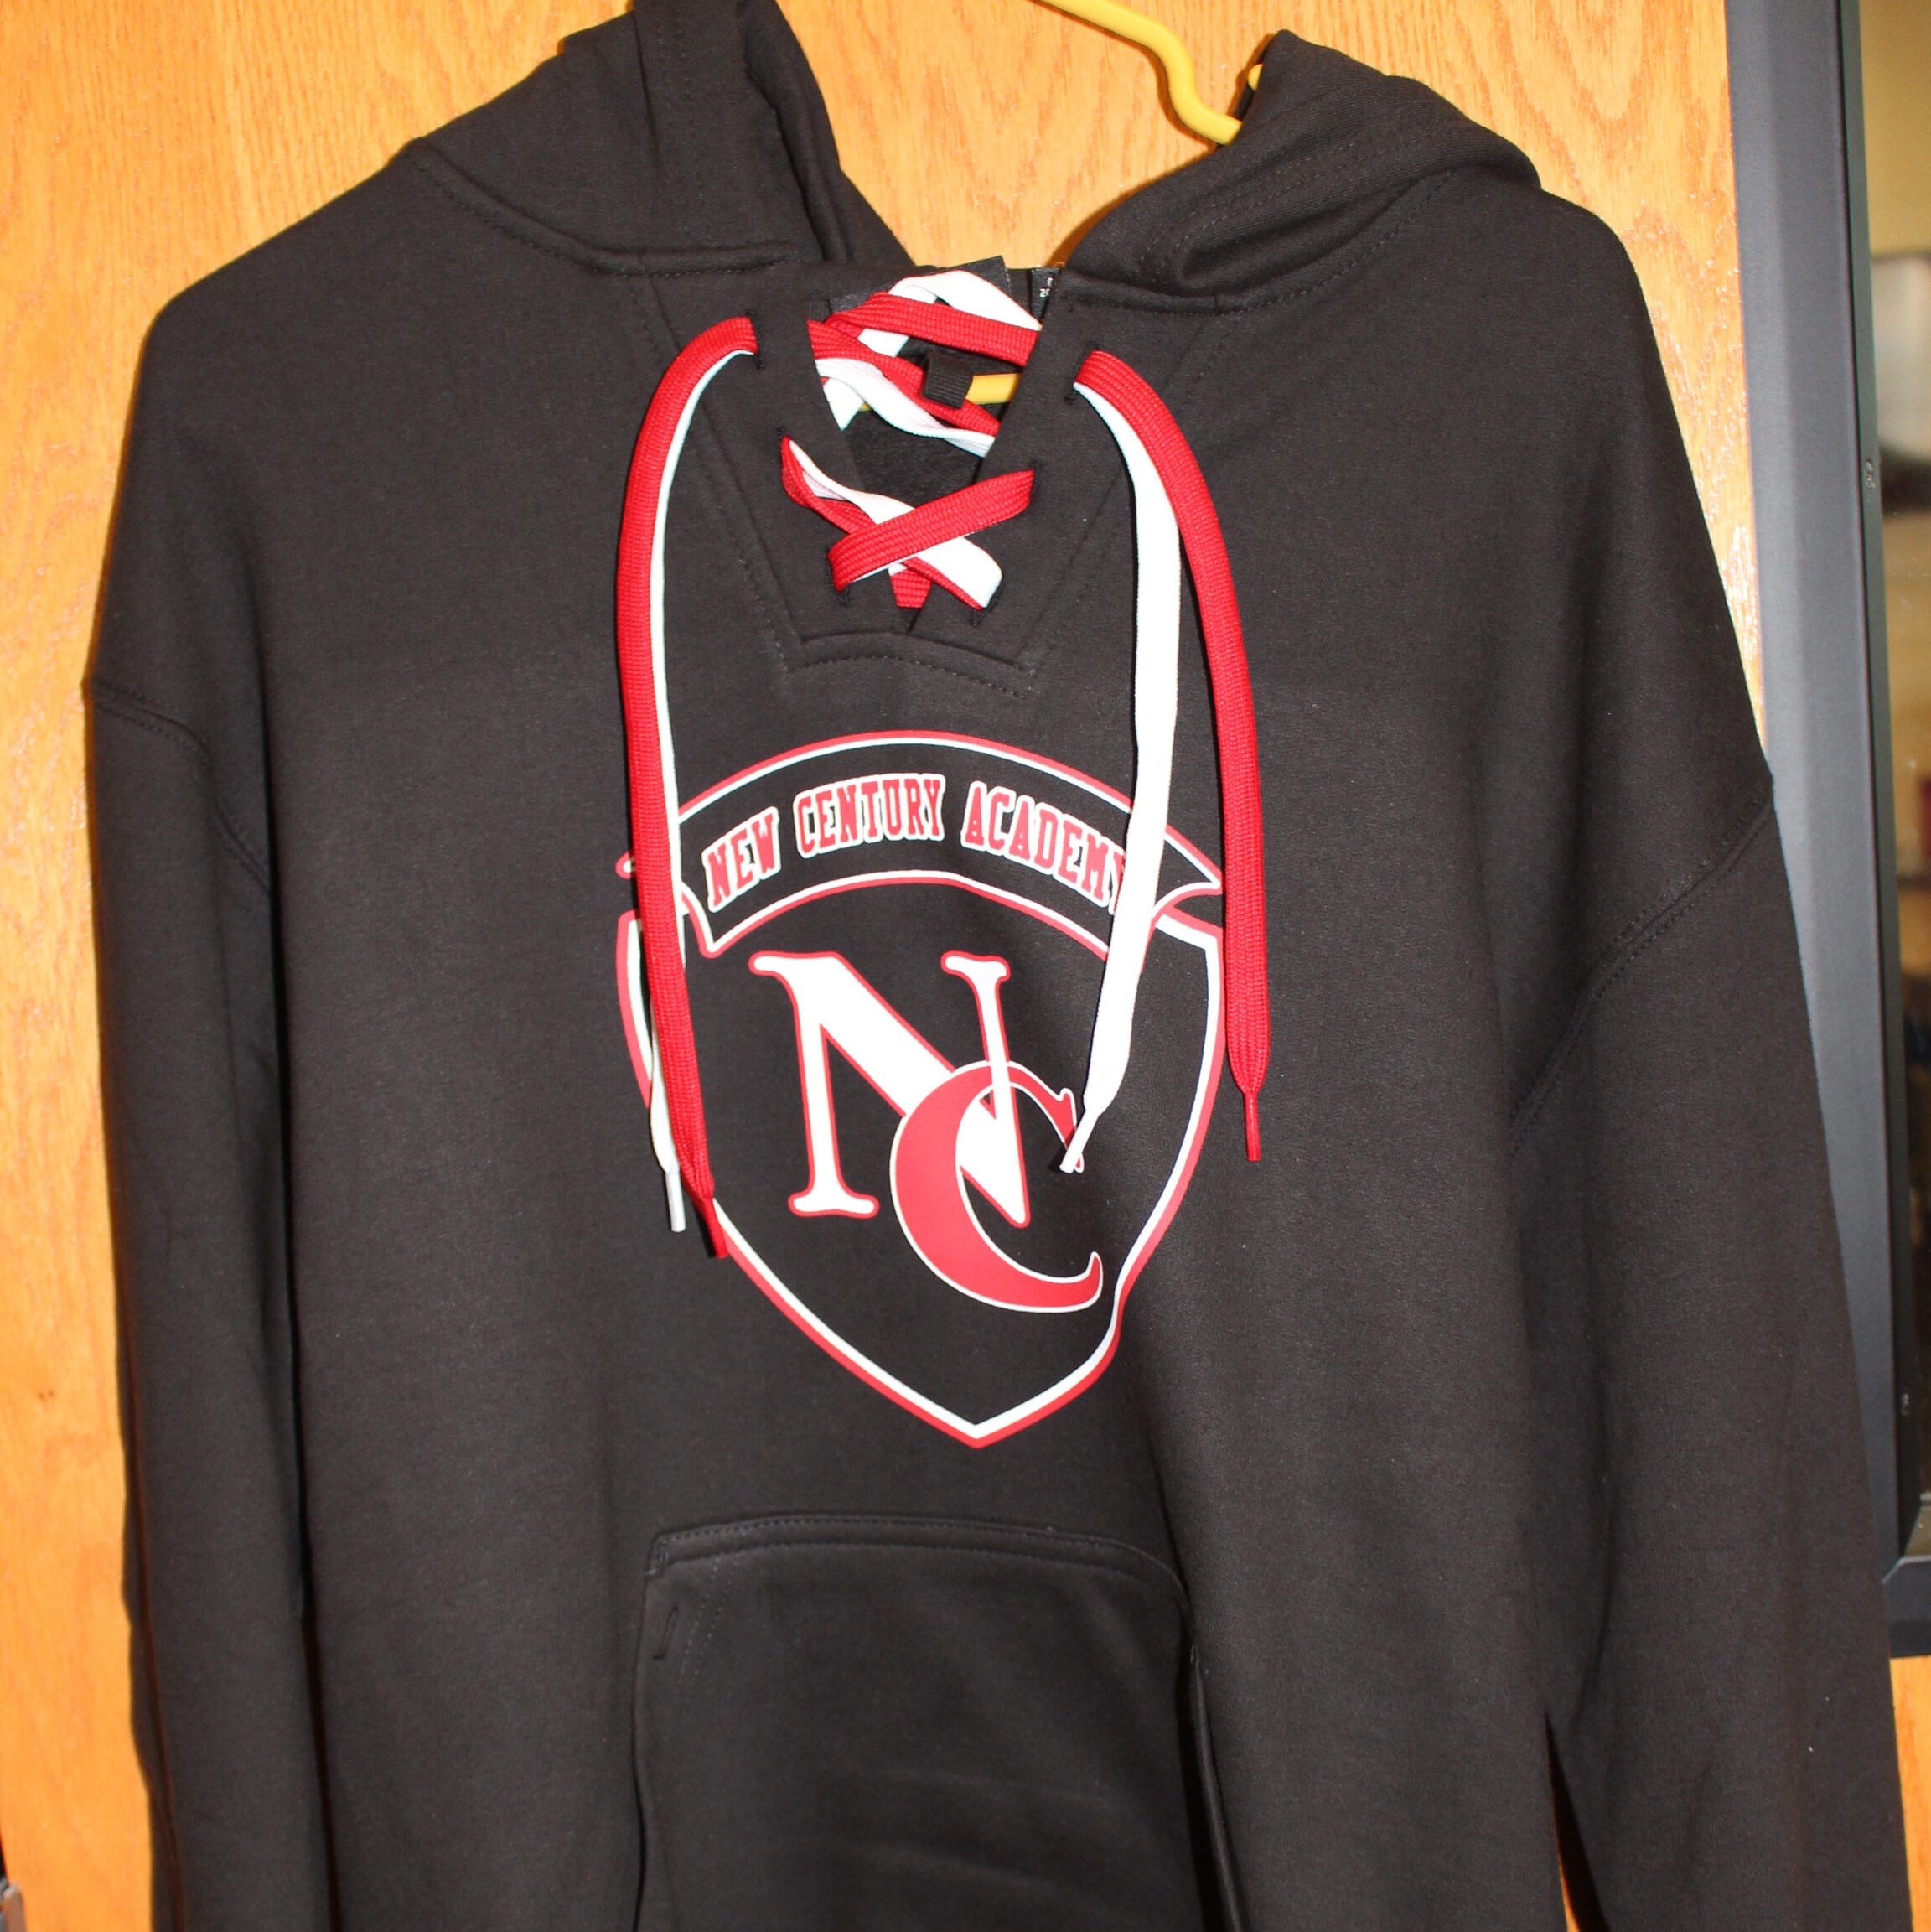 black hockey hoodie with the New Century Academy logo on it